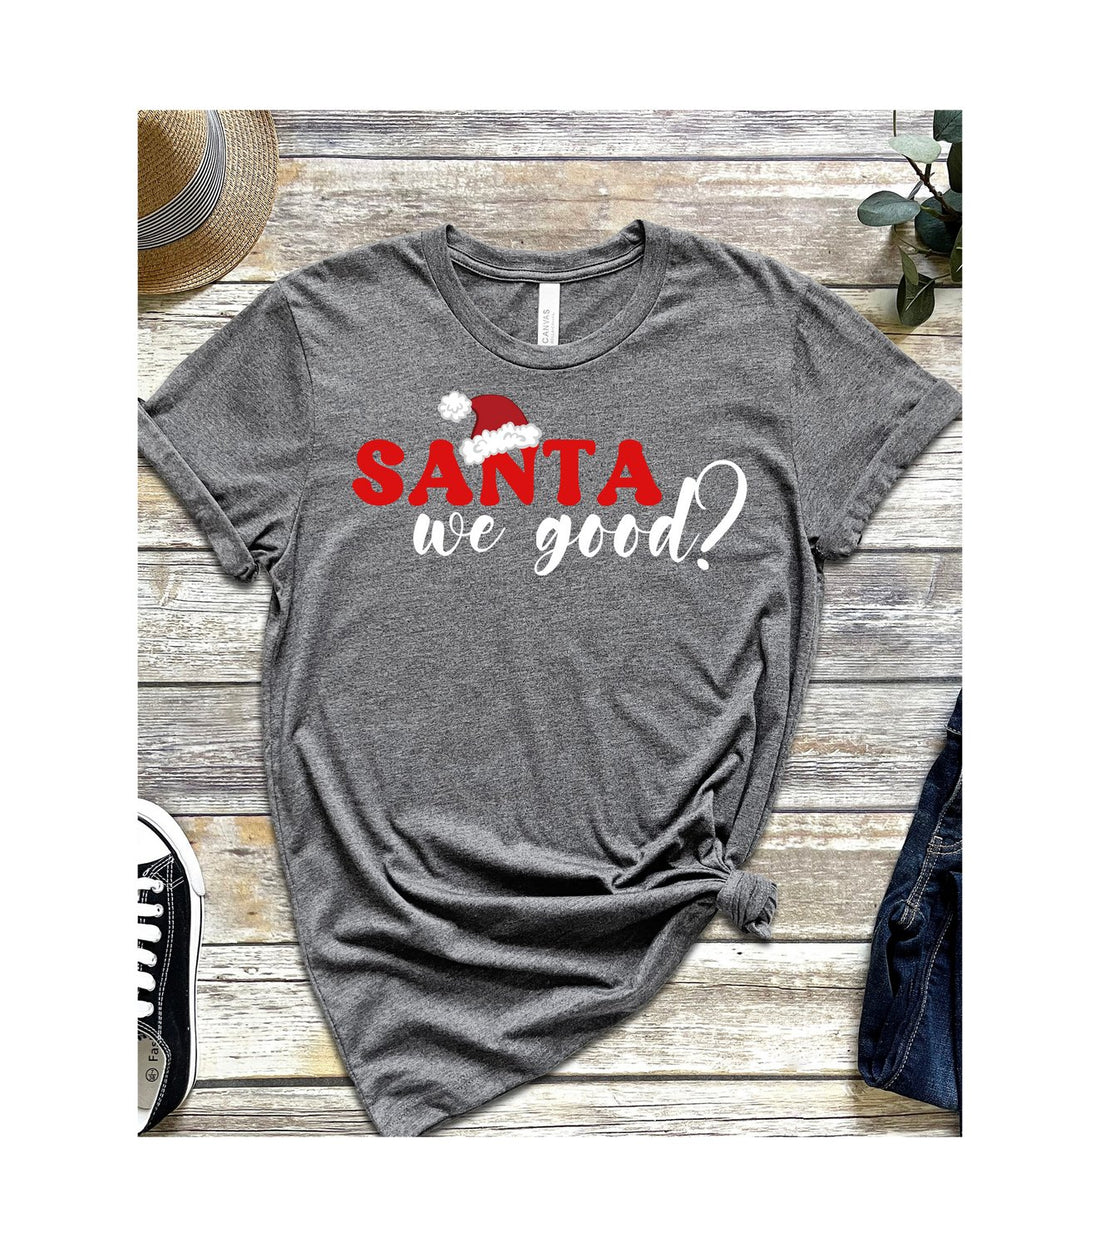 Santa We Good? - T-Shirts - Positively Sassy - Santa We Good?